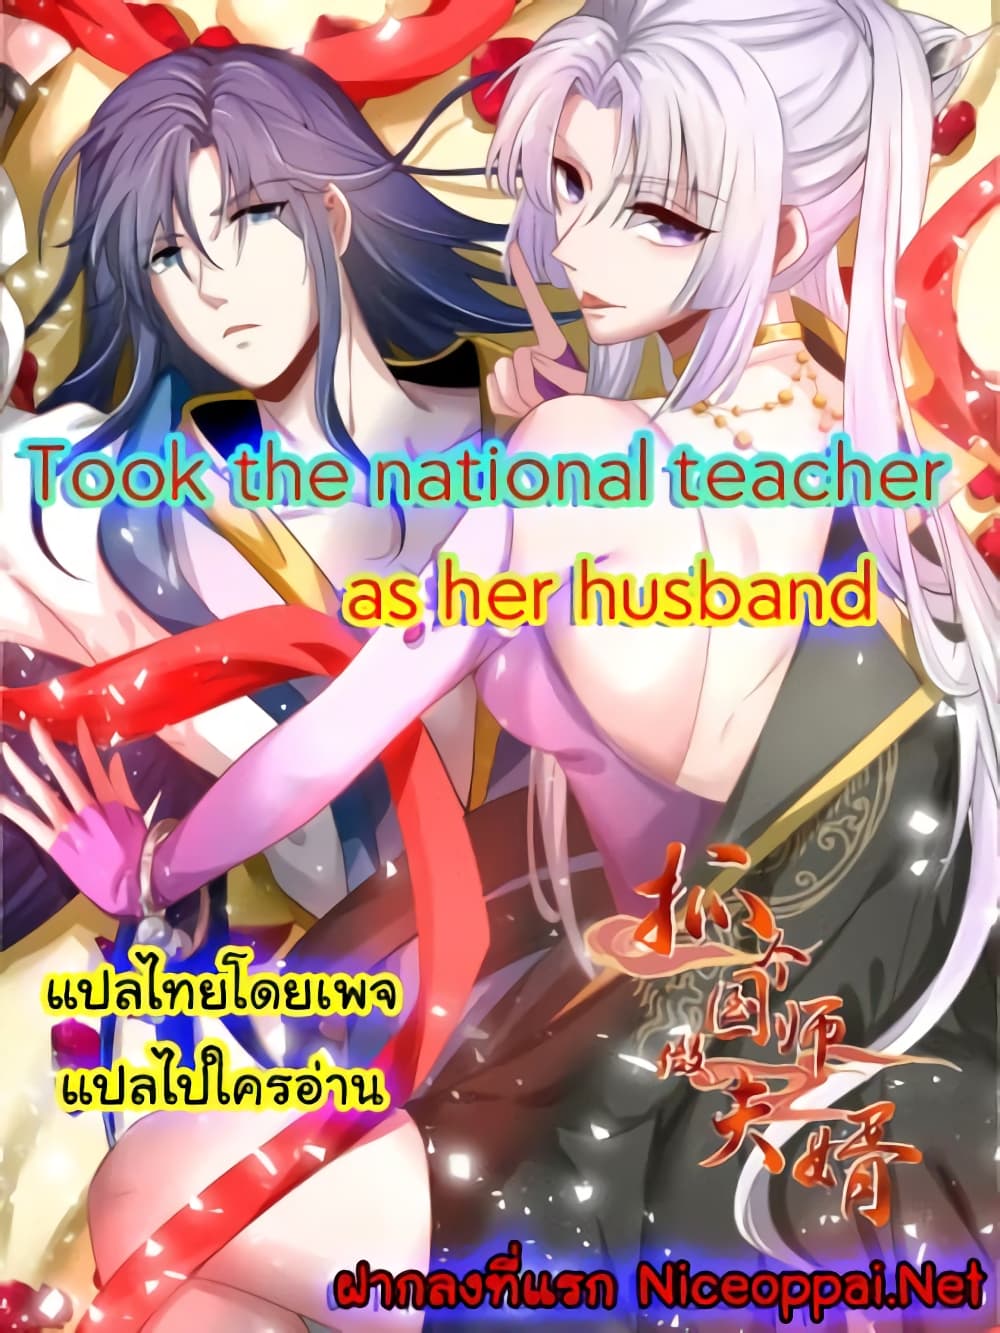 Took the National Teacher as Her Husband 11 (1)